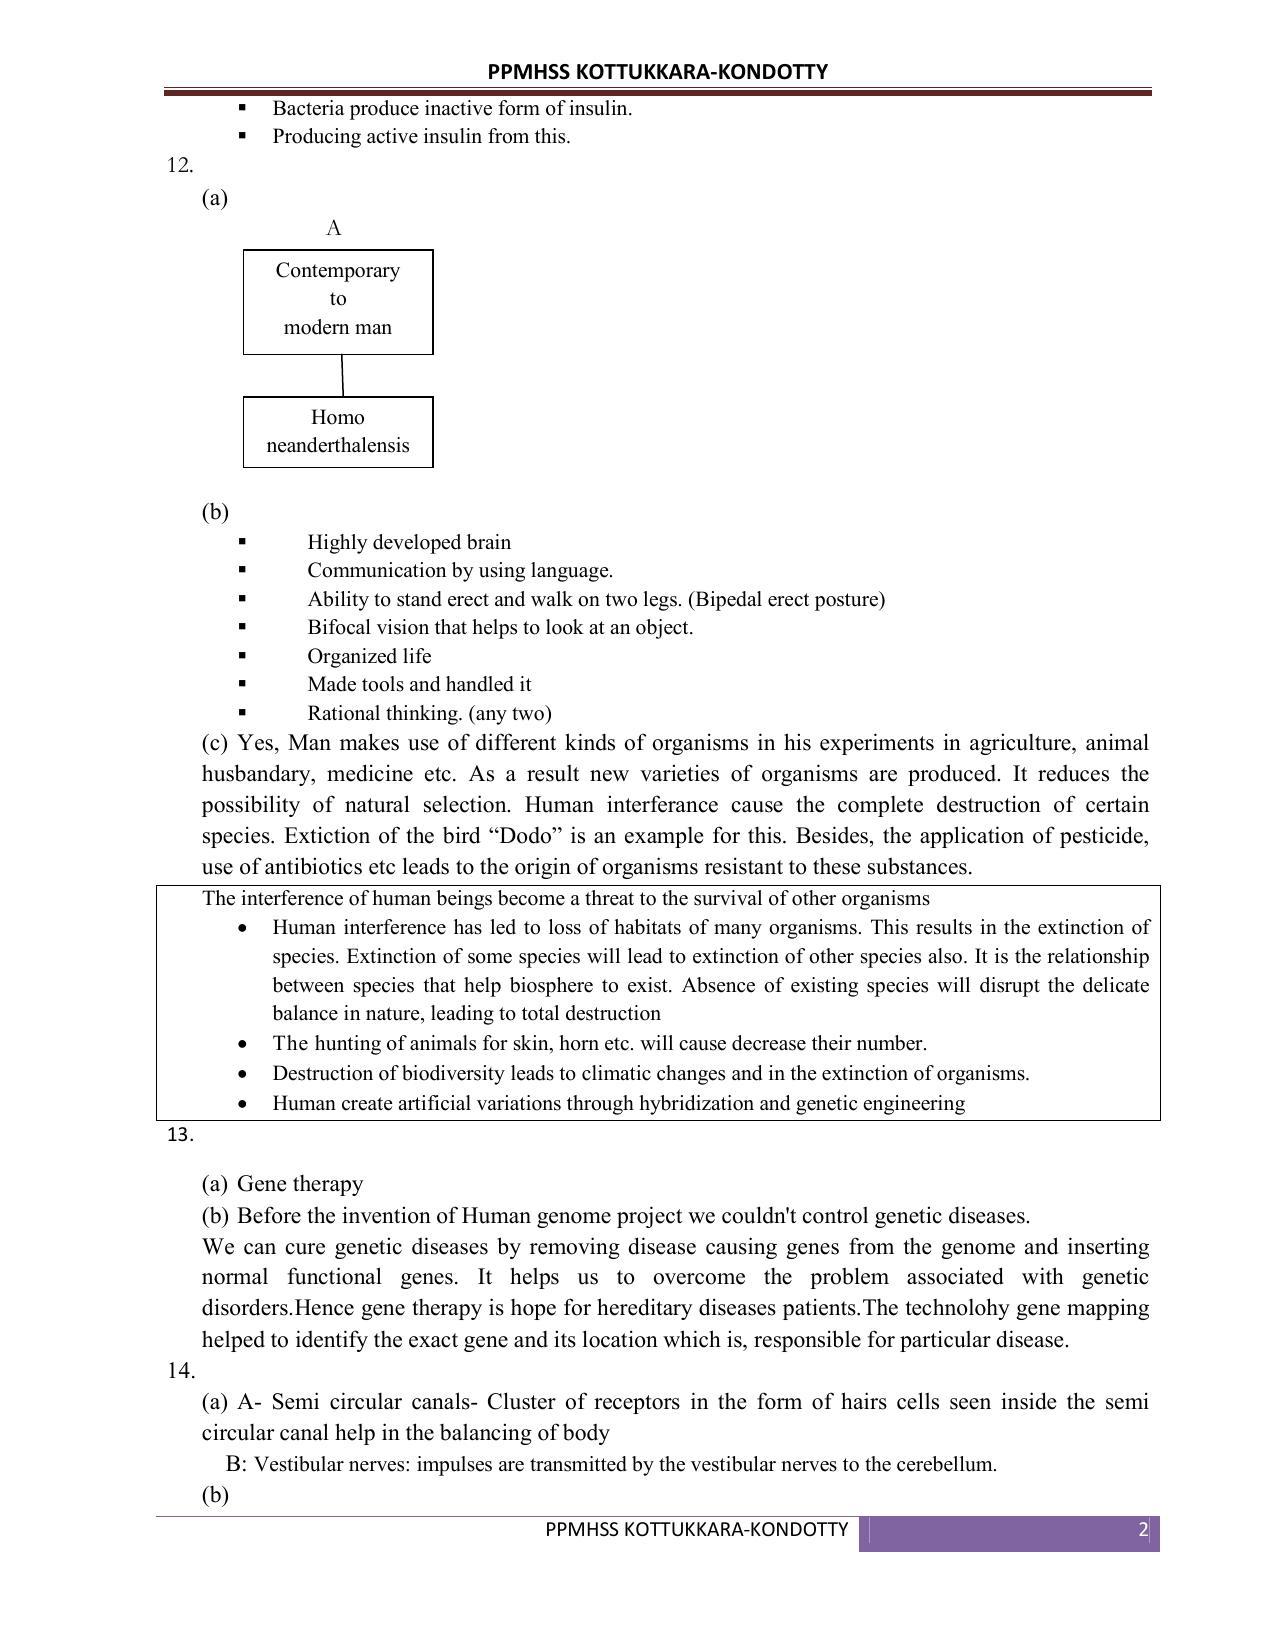 Kerala SSLC 2019  Biology Answer Key (EM) (Model) - Page 2